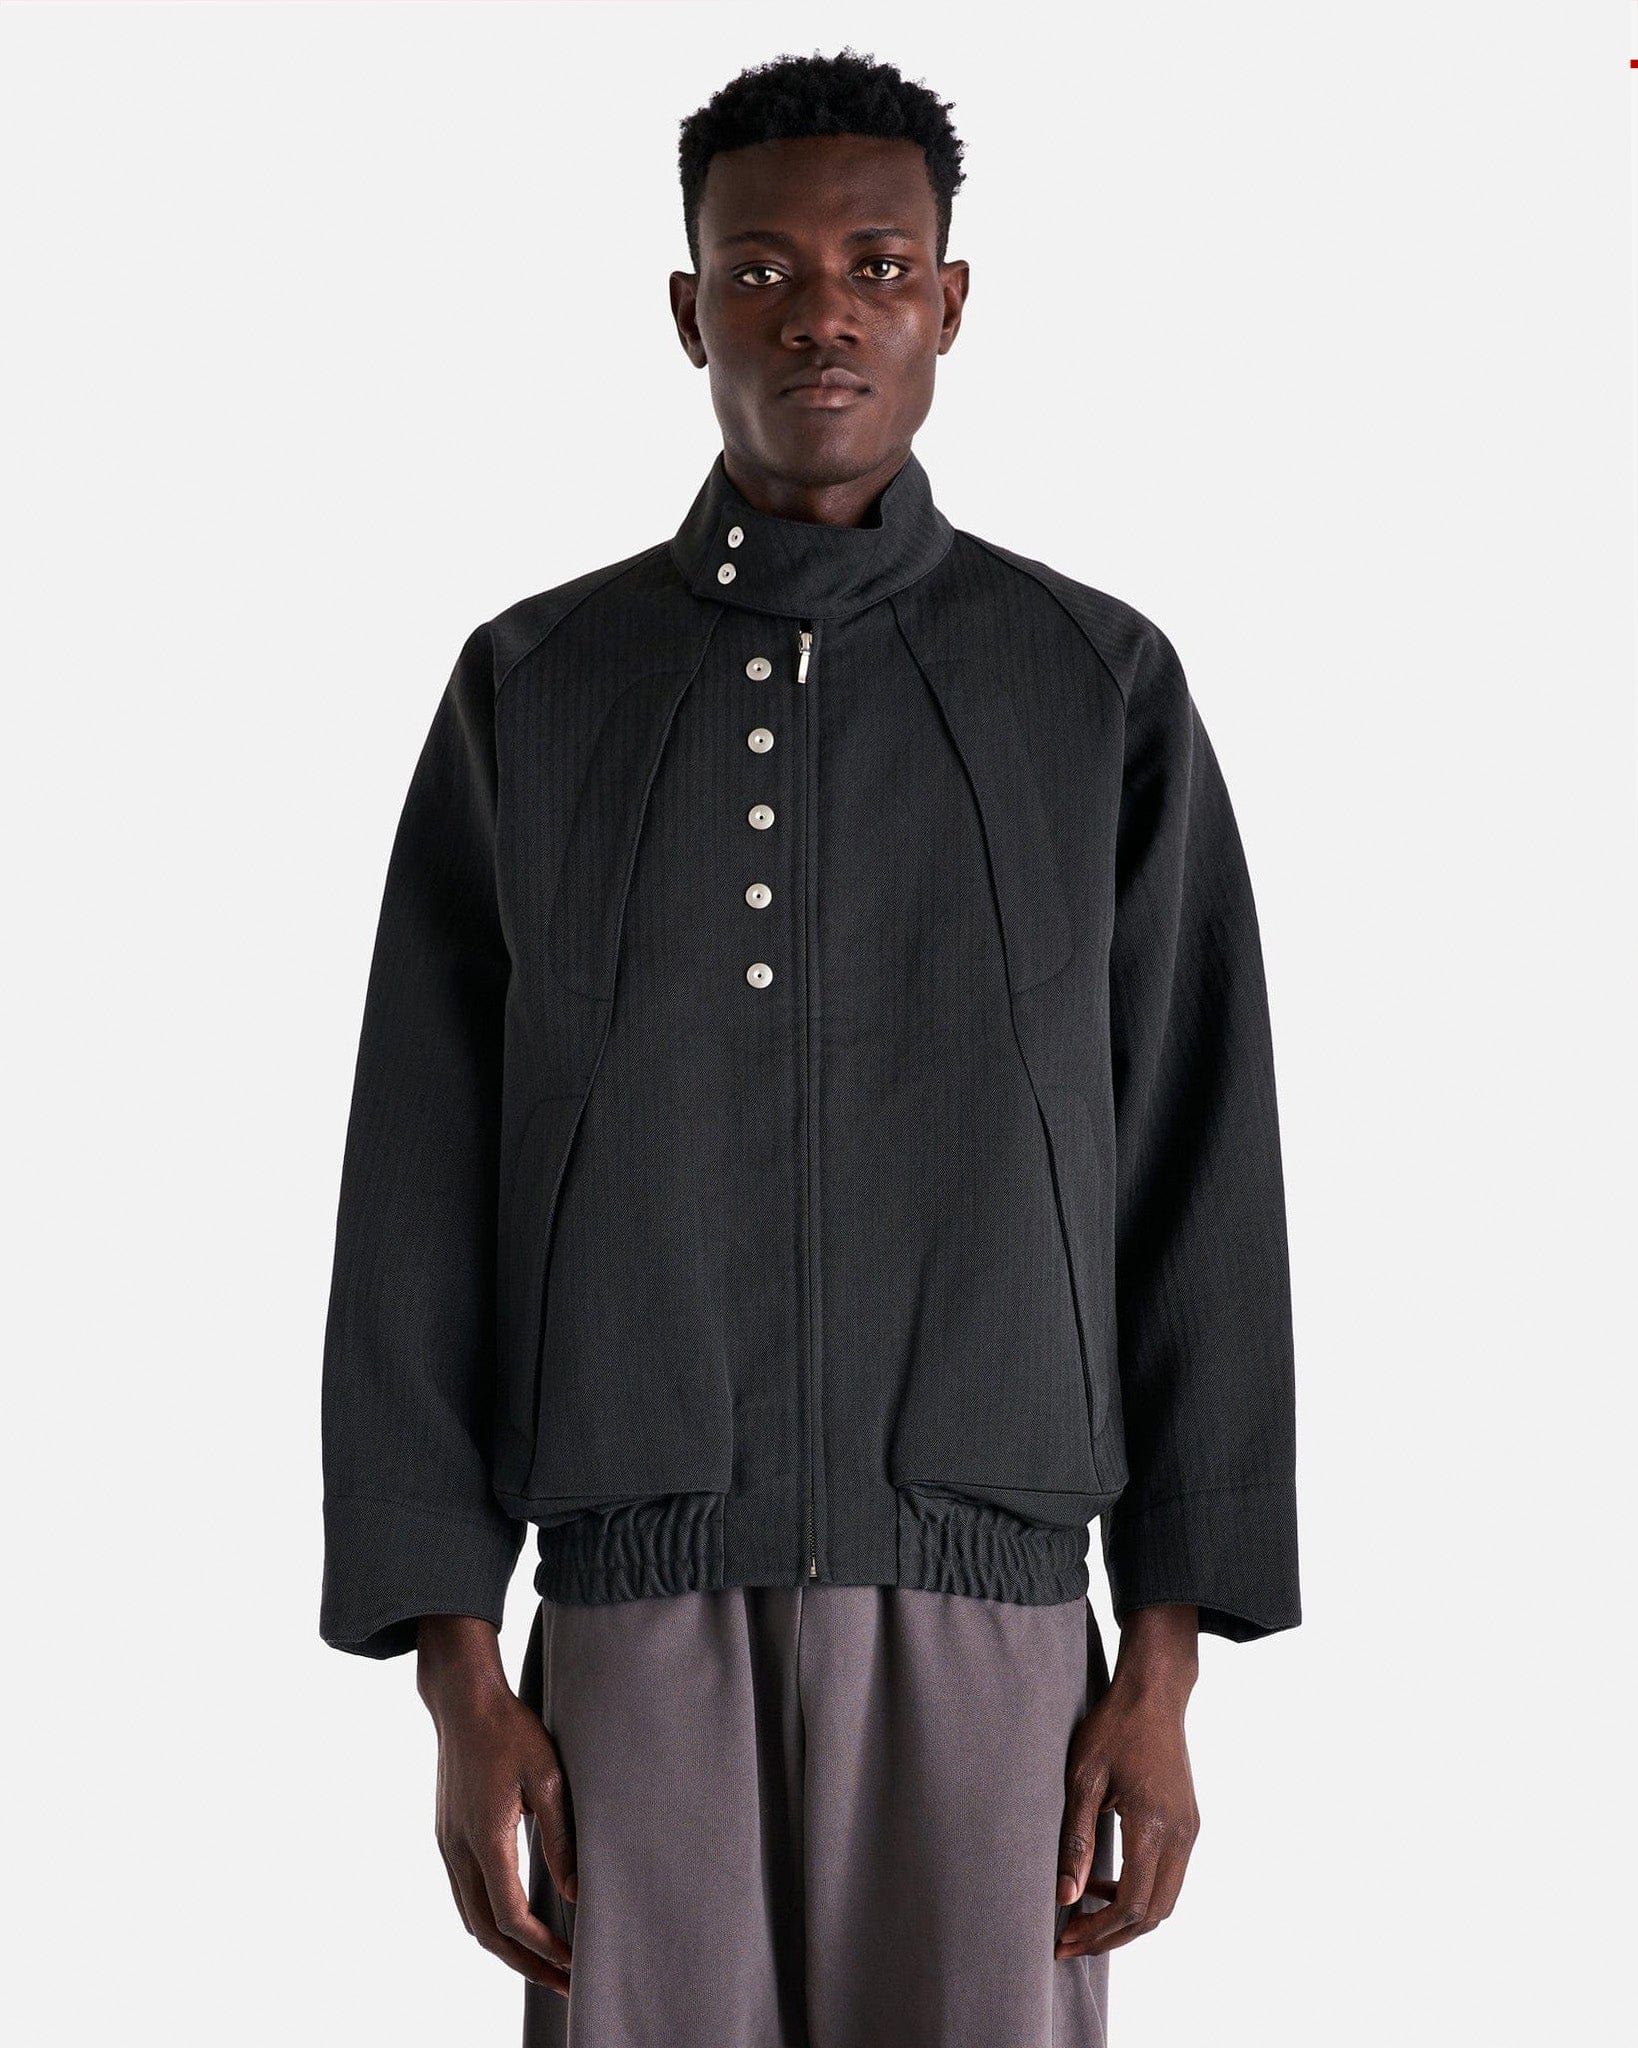 Omar Afridi Men's Jackets Tech Drizzler in Dark Grey Herringbone